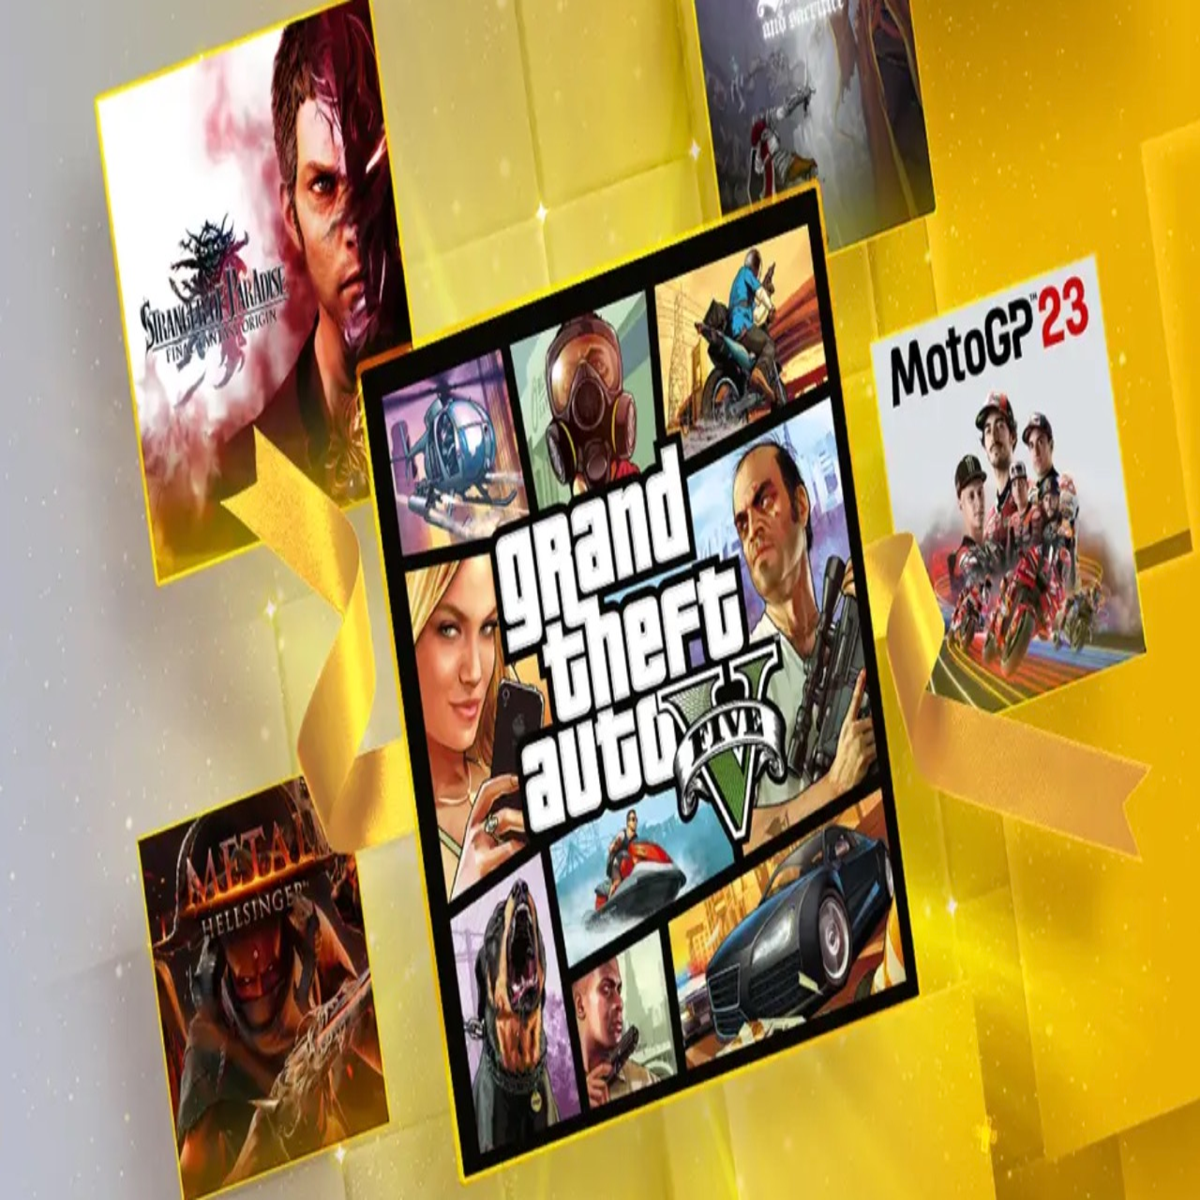 GTA V Grand Theft Auto 5 (PS5 / PlayStation 5) BRAND NEW